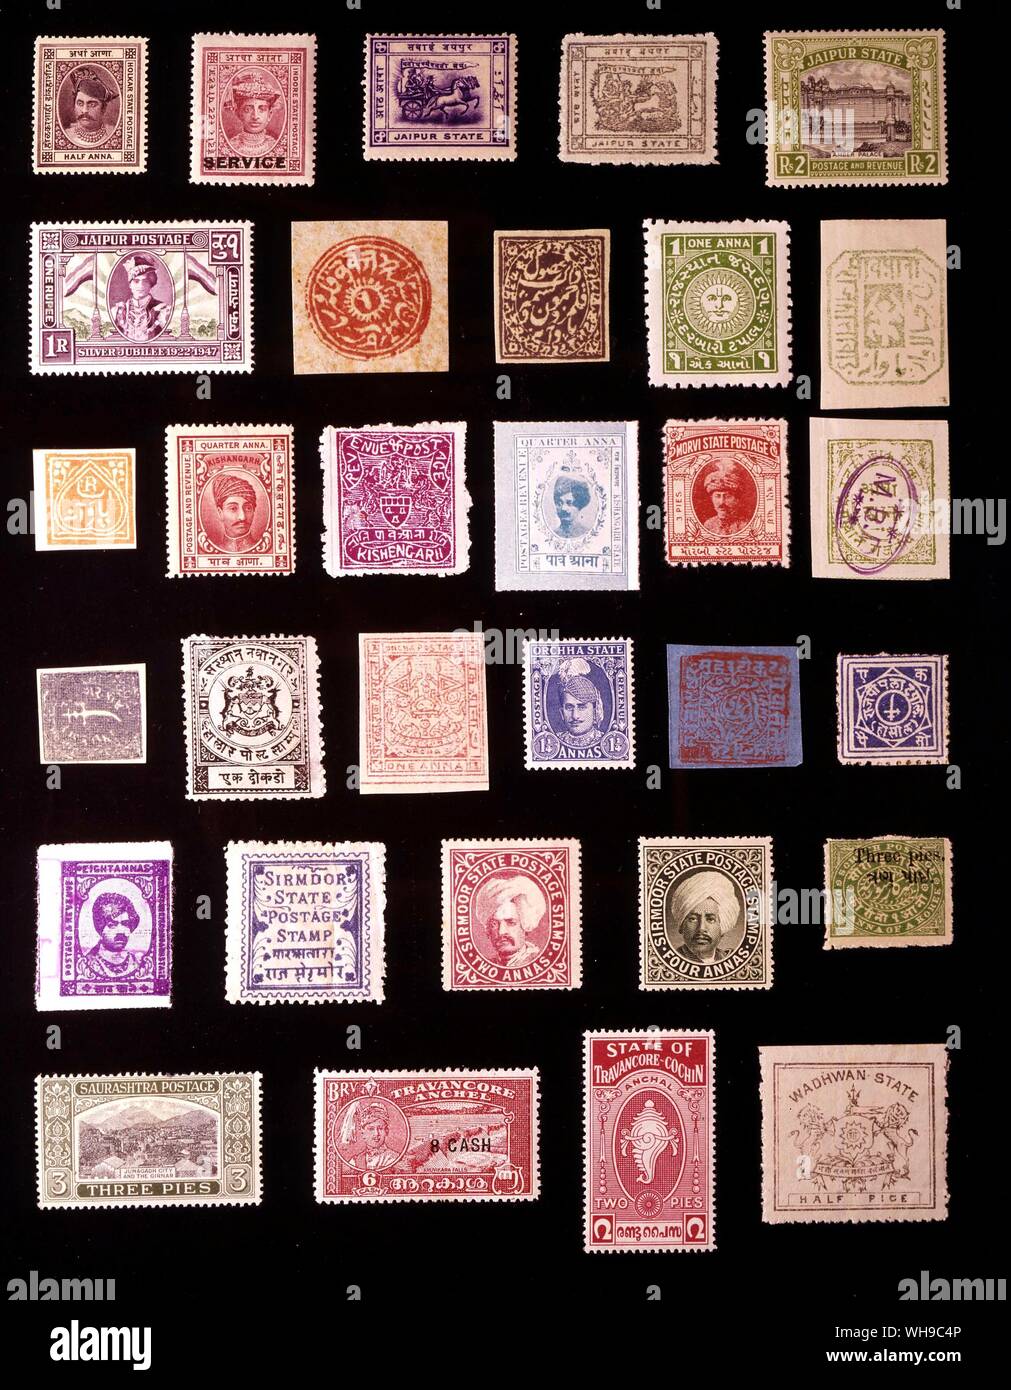 Asie - INDIAN PRINCIPAUTÉS (Page 2 de 2) : (gauche à droite) 1. Indore (Holkar). 0,5 anna, 1889, 2. Indore, 0,5 anna, 1904, 3. Jaipur, 8 Annas, 1905, 4. Jaipur, 0,5 anna, 1913, 5. Jaipur, 2 roupies, 1931, 6. Jaipur, 1 roupie, 1948, 7. Le Jammu-et-Cachemire, Anna 1, 1869, 8. Le Jammu-et-Cachemire, Anna, 1883, 0,25 9. 1 Jasdan, Anna, 1942, 10. Jhalawar, Anna, 1887, 0,25 11. Jind, Anna, 1882, 0,25 12. Kishangarh, Anna, 1904, 0,25 13. Kishangarh, Anna, 1899, 0,25 14. Kishangarh, Anna, 1912, 0,25 15. Morvi, 3 tartes, 1934, 16. Nandgaon, 0,5, 1893 Anna, 17. Docra Nawanagar, 1, 1877, 18. Docra Nawanagar, 1, Banque D'Images